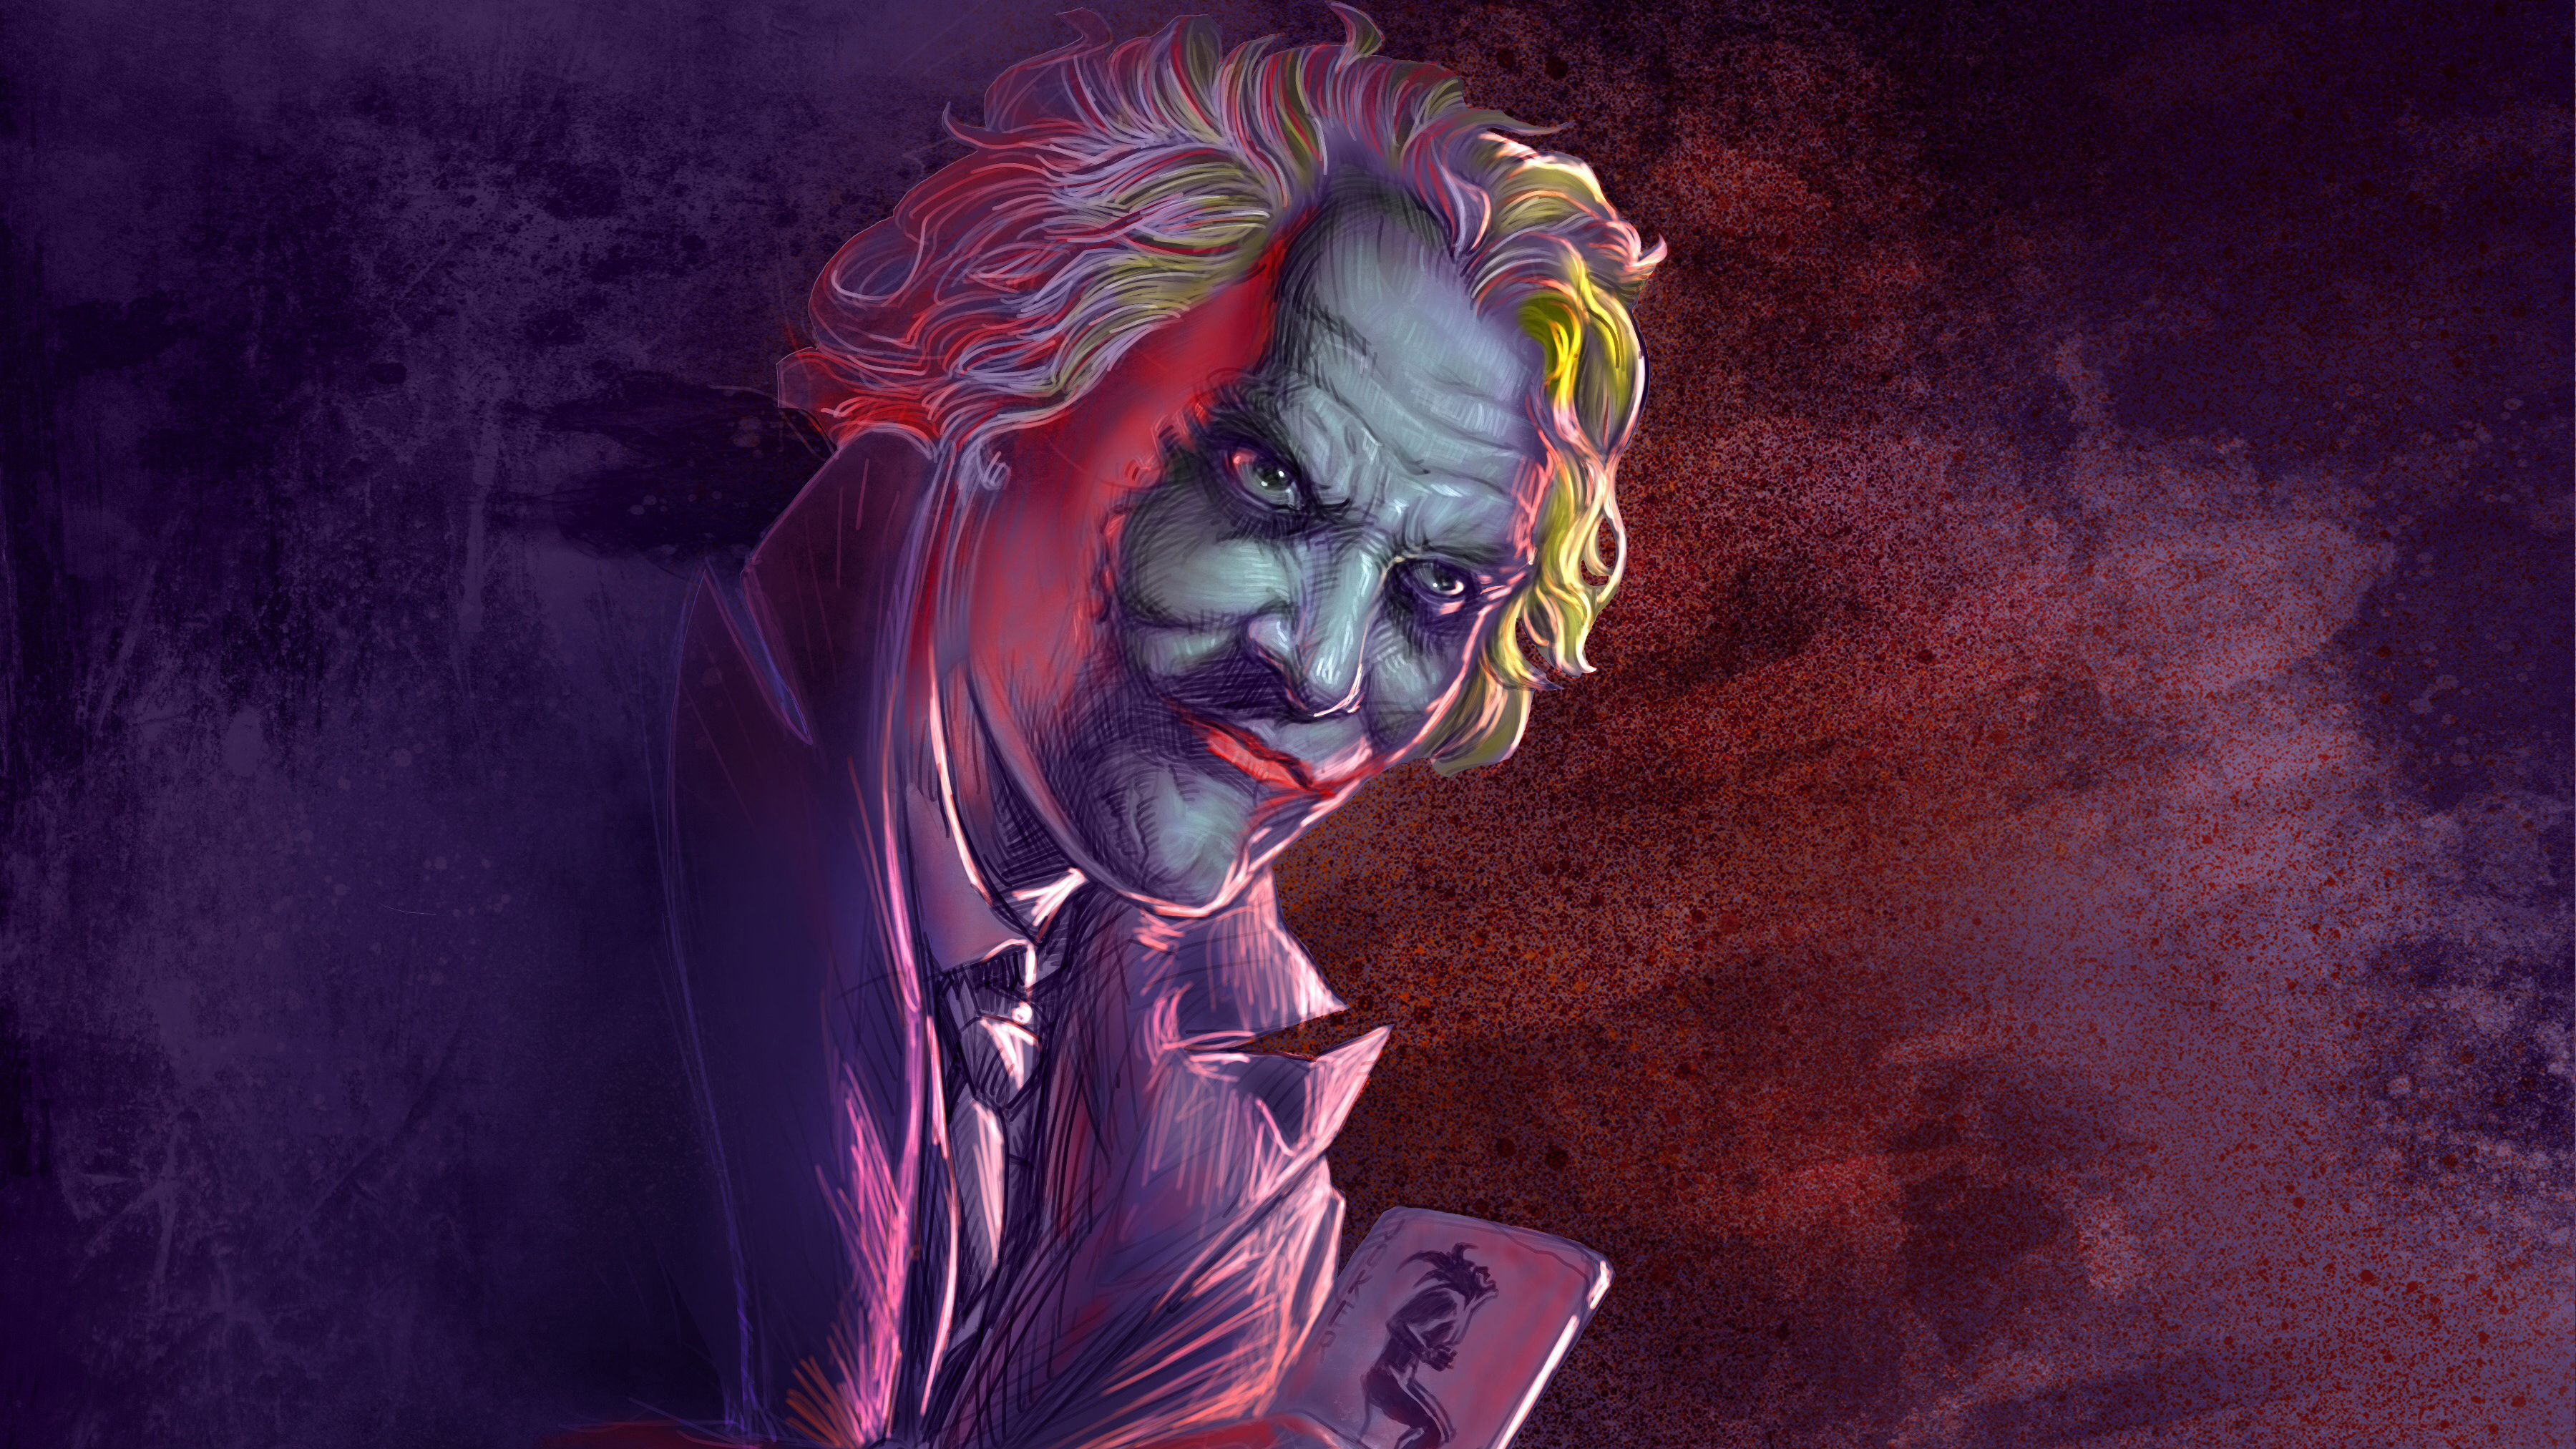 Joker Wallpaper / Joker - Best htc one wallpapers, free and easy to download / Flashpoint, joker, harley quinn, batman, the flash, aquaman, wonder woman, justice league, dc comics, crossover, dc.